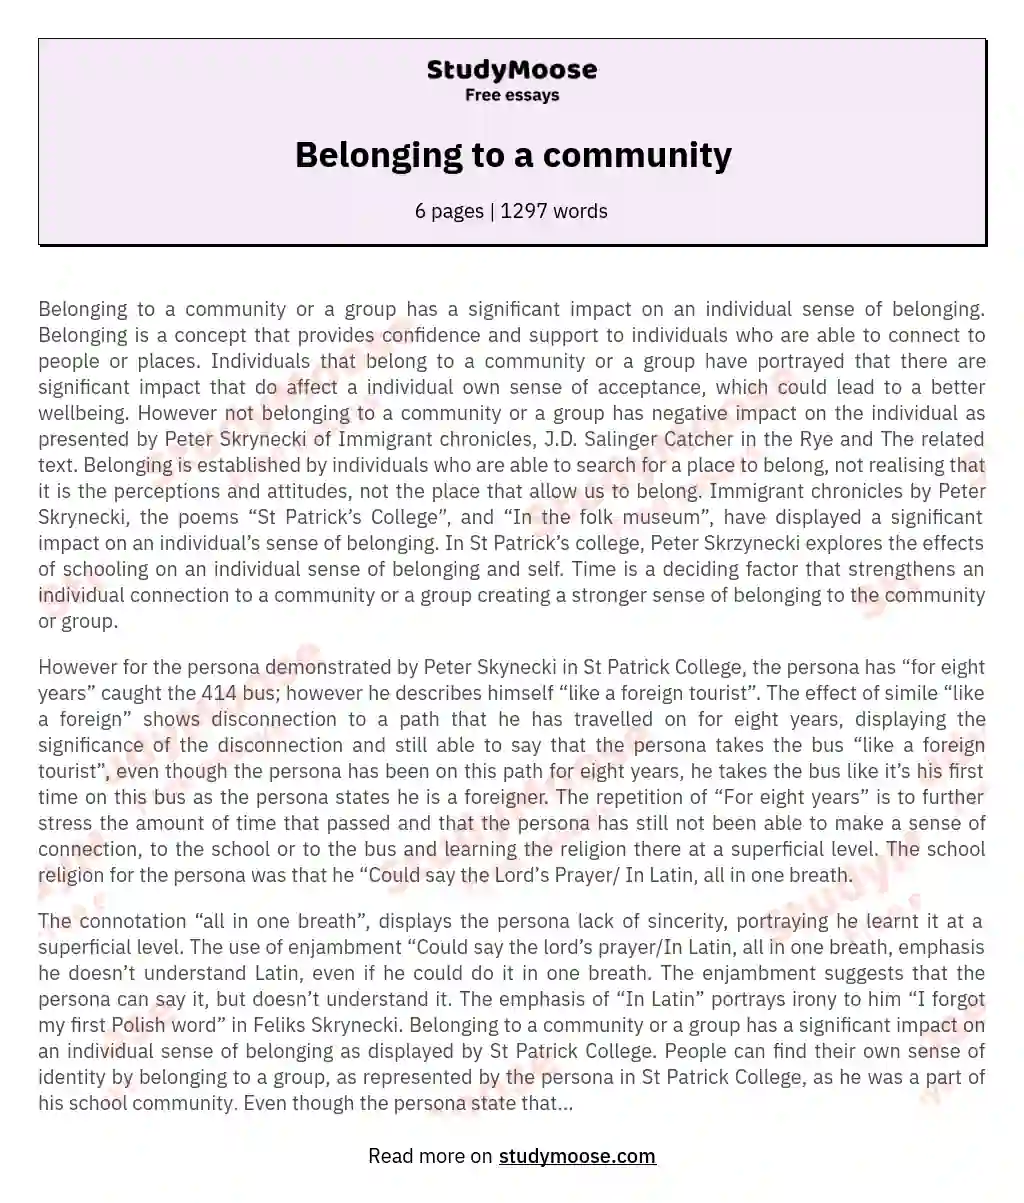 Belonging to a community